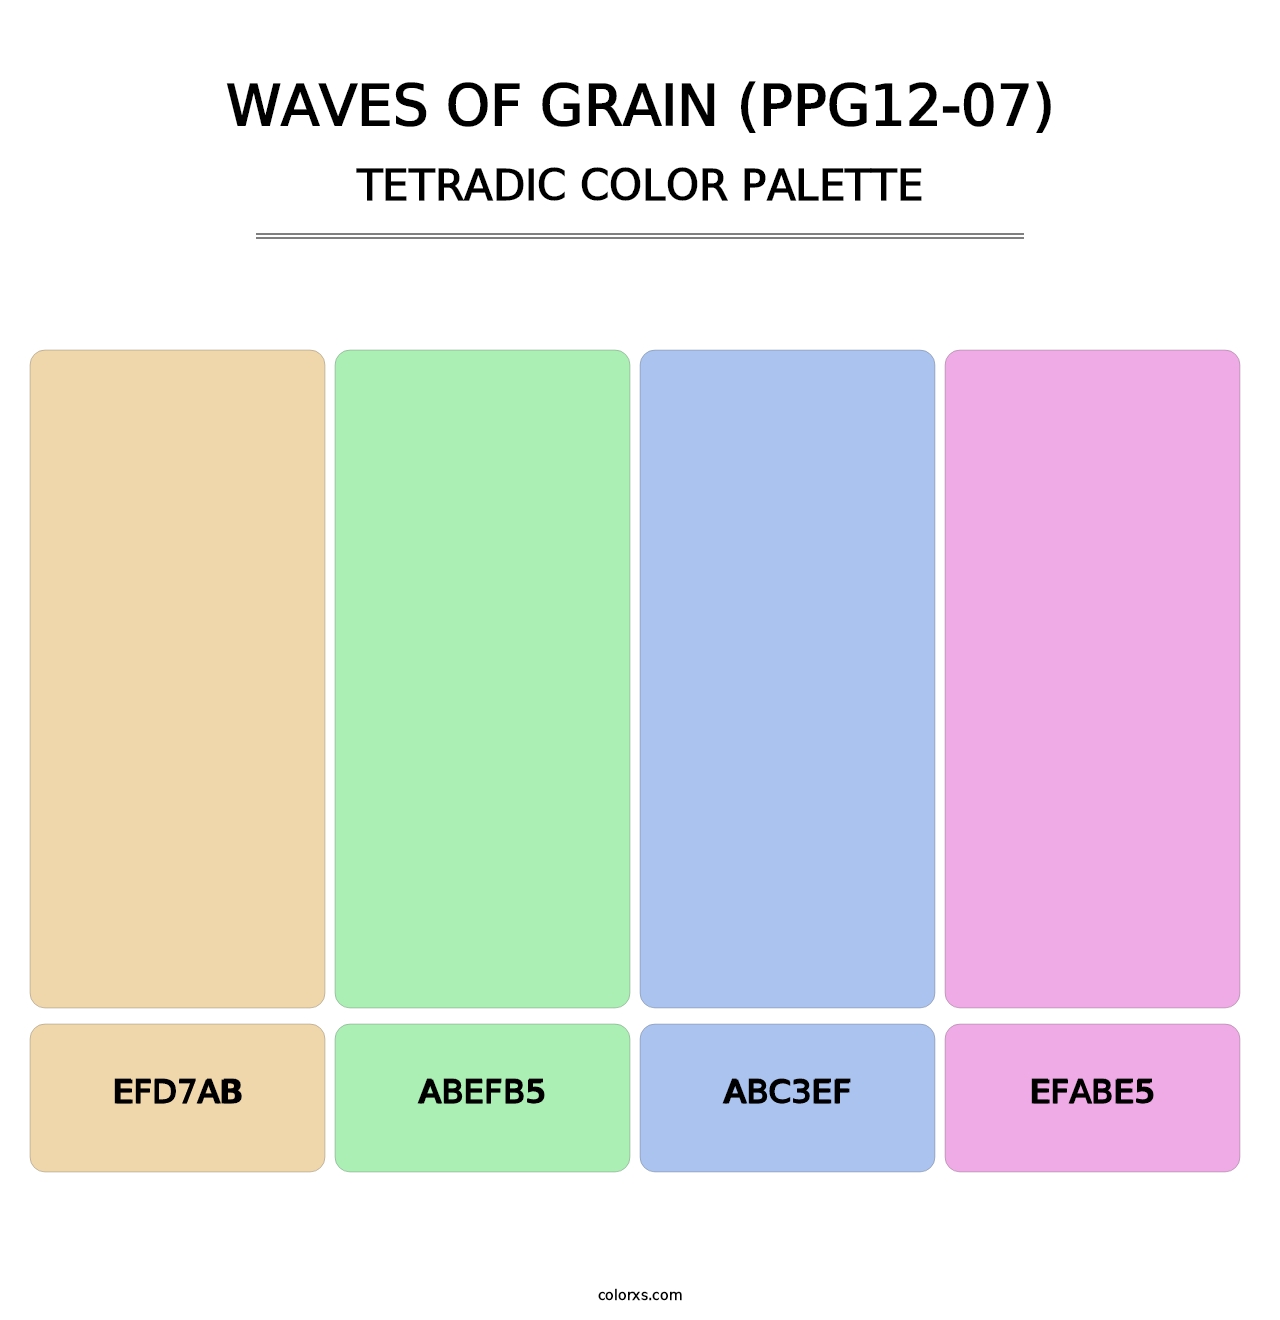 Waves Of Grain (PPG12-07) - Tetradic Color Palette